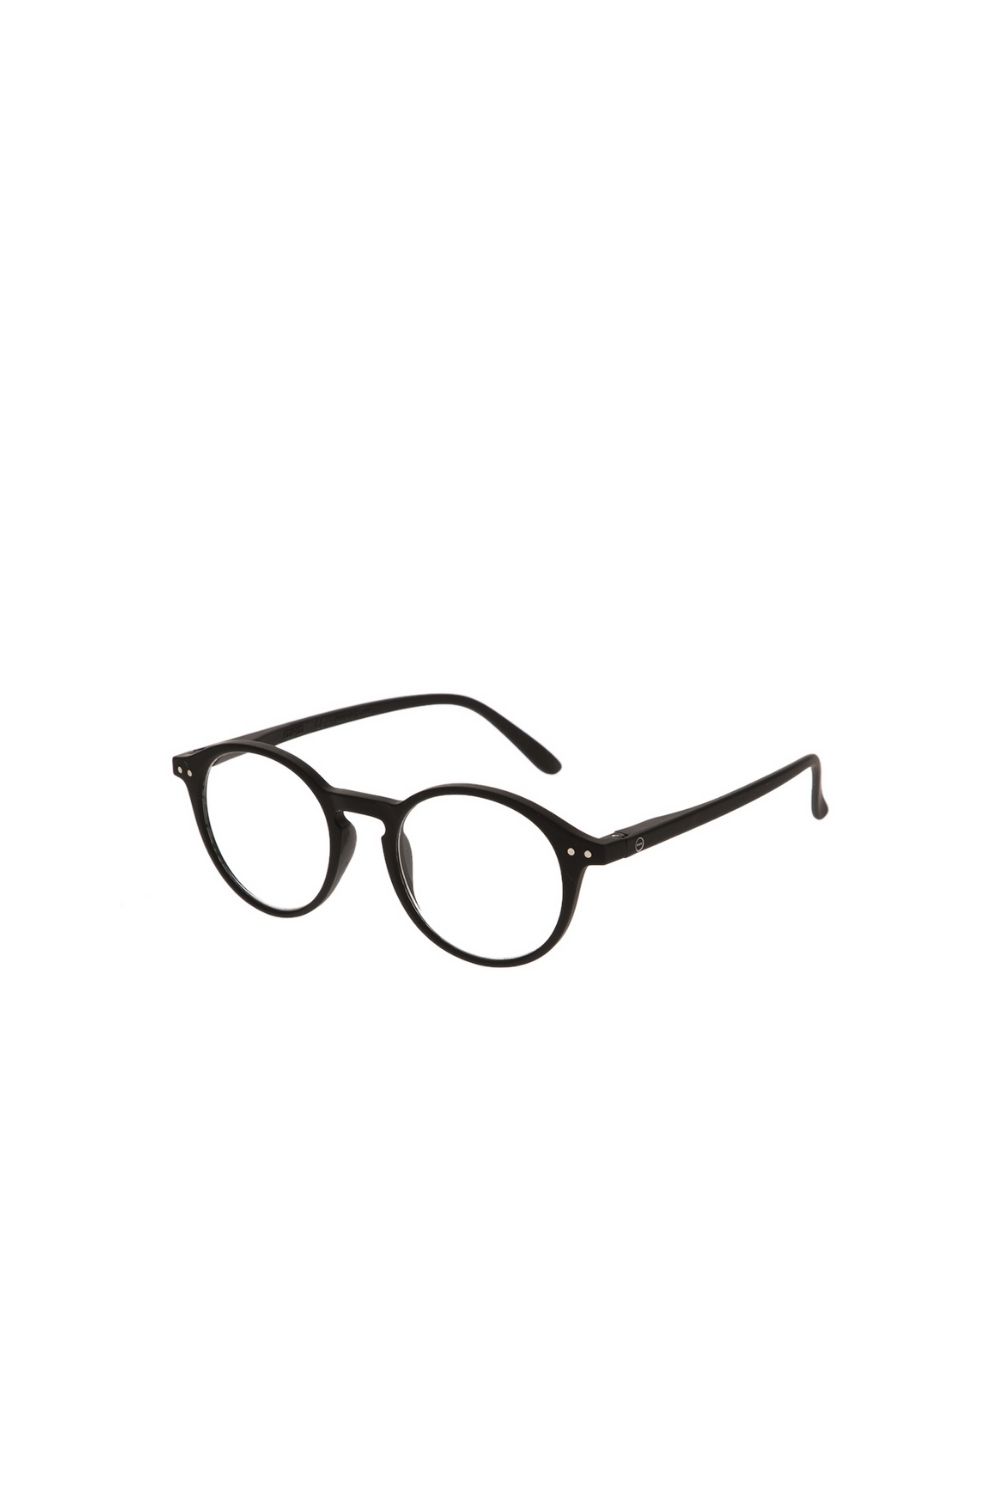 IZIPIZI - Unisex γυαλιά οράσεως IZIPIZI READING #D μαύρο Γυναικεία/Αξεσουάρ/Γυαλιά/Οράσεως